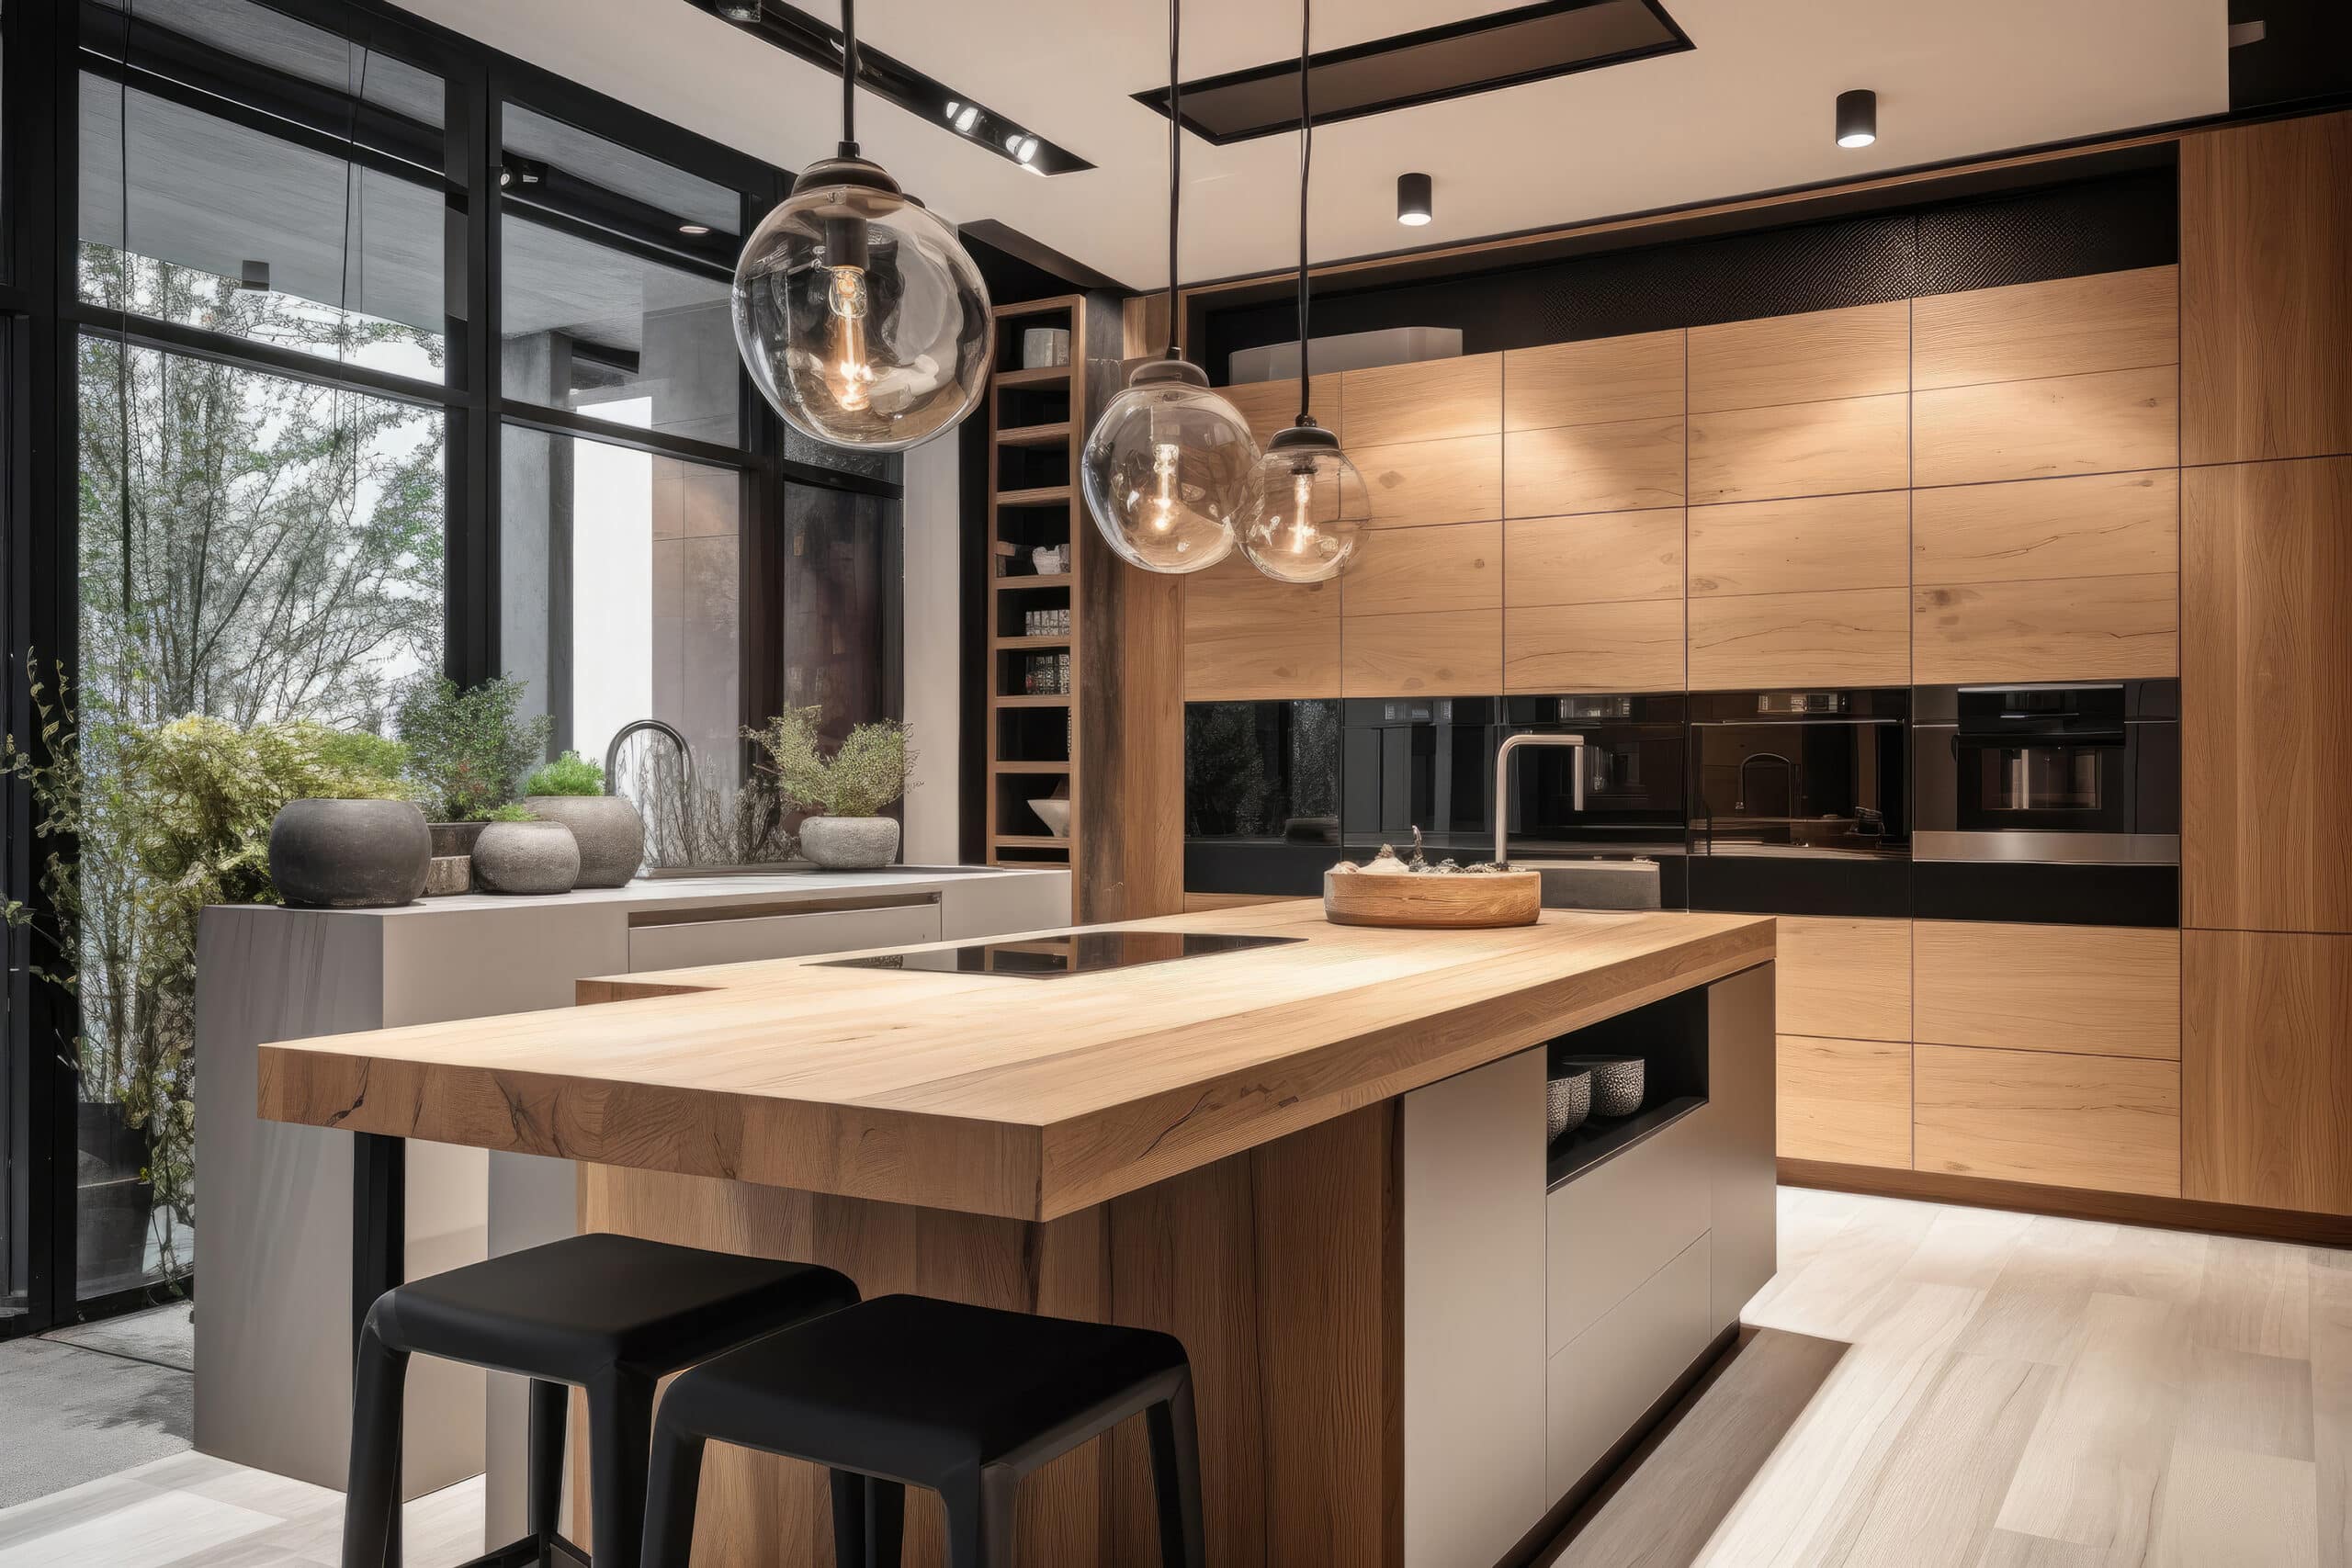 Kitchen island in modern luxurious kitchen interior. Created with Generative AI technology.